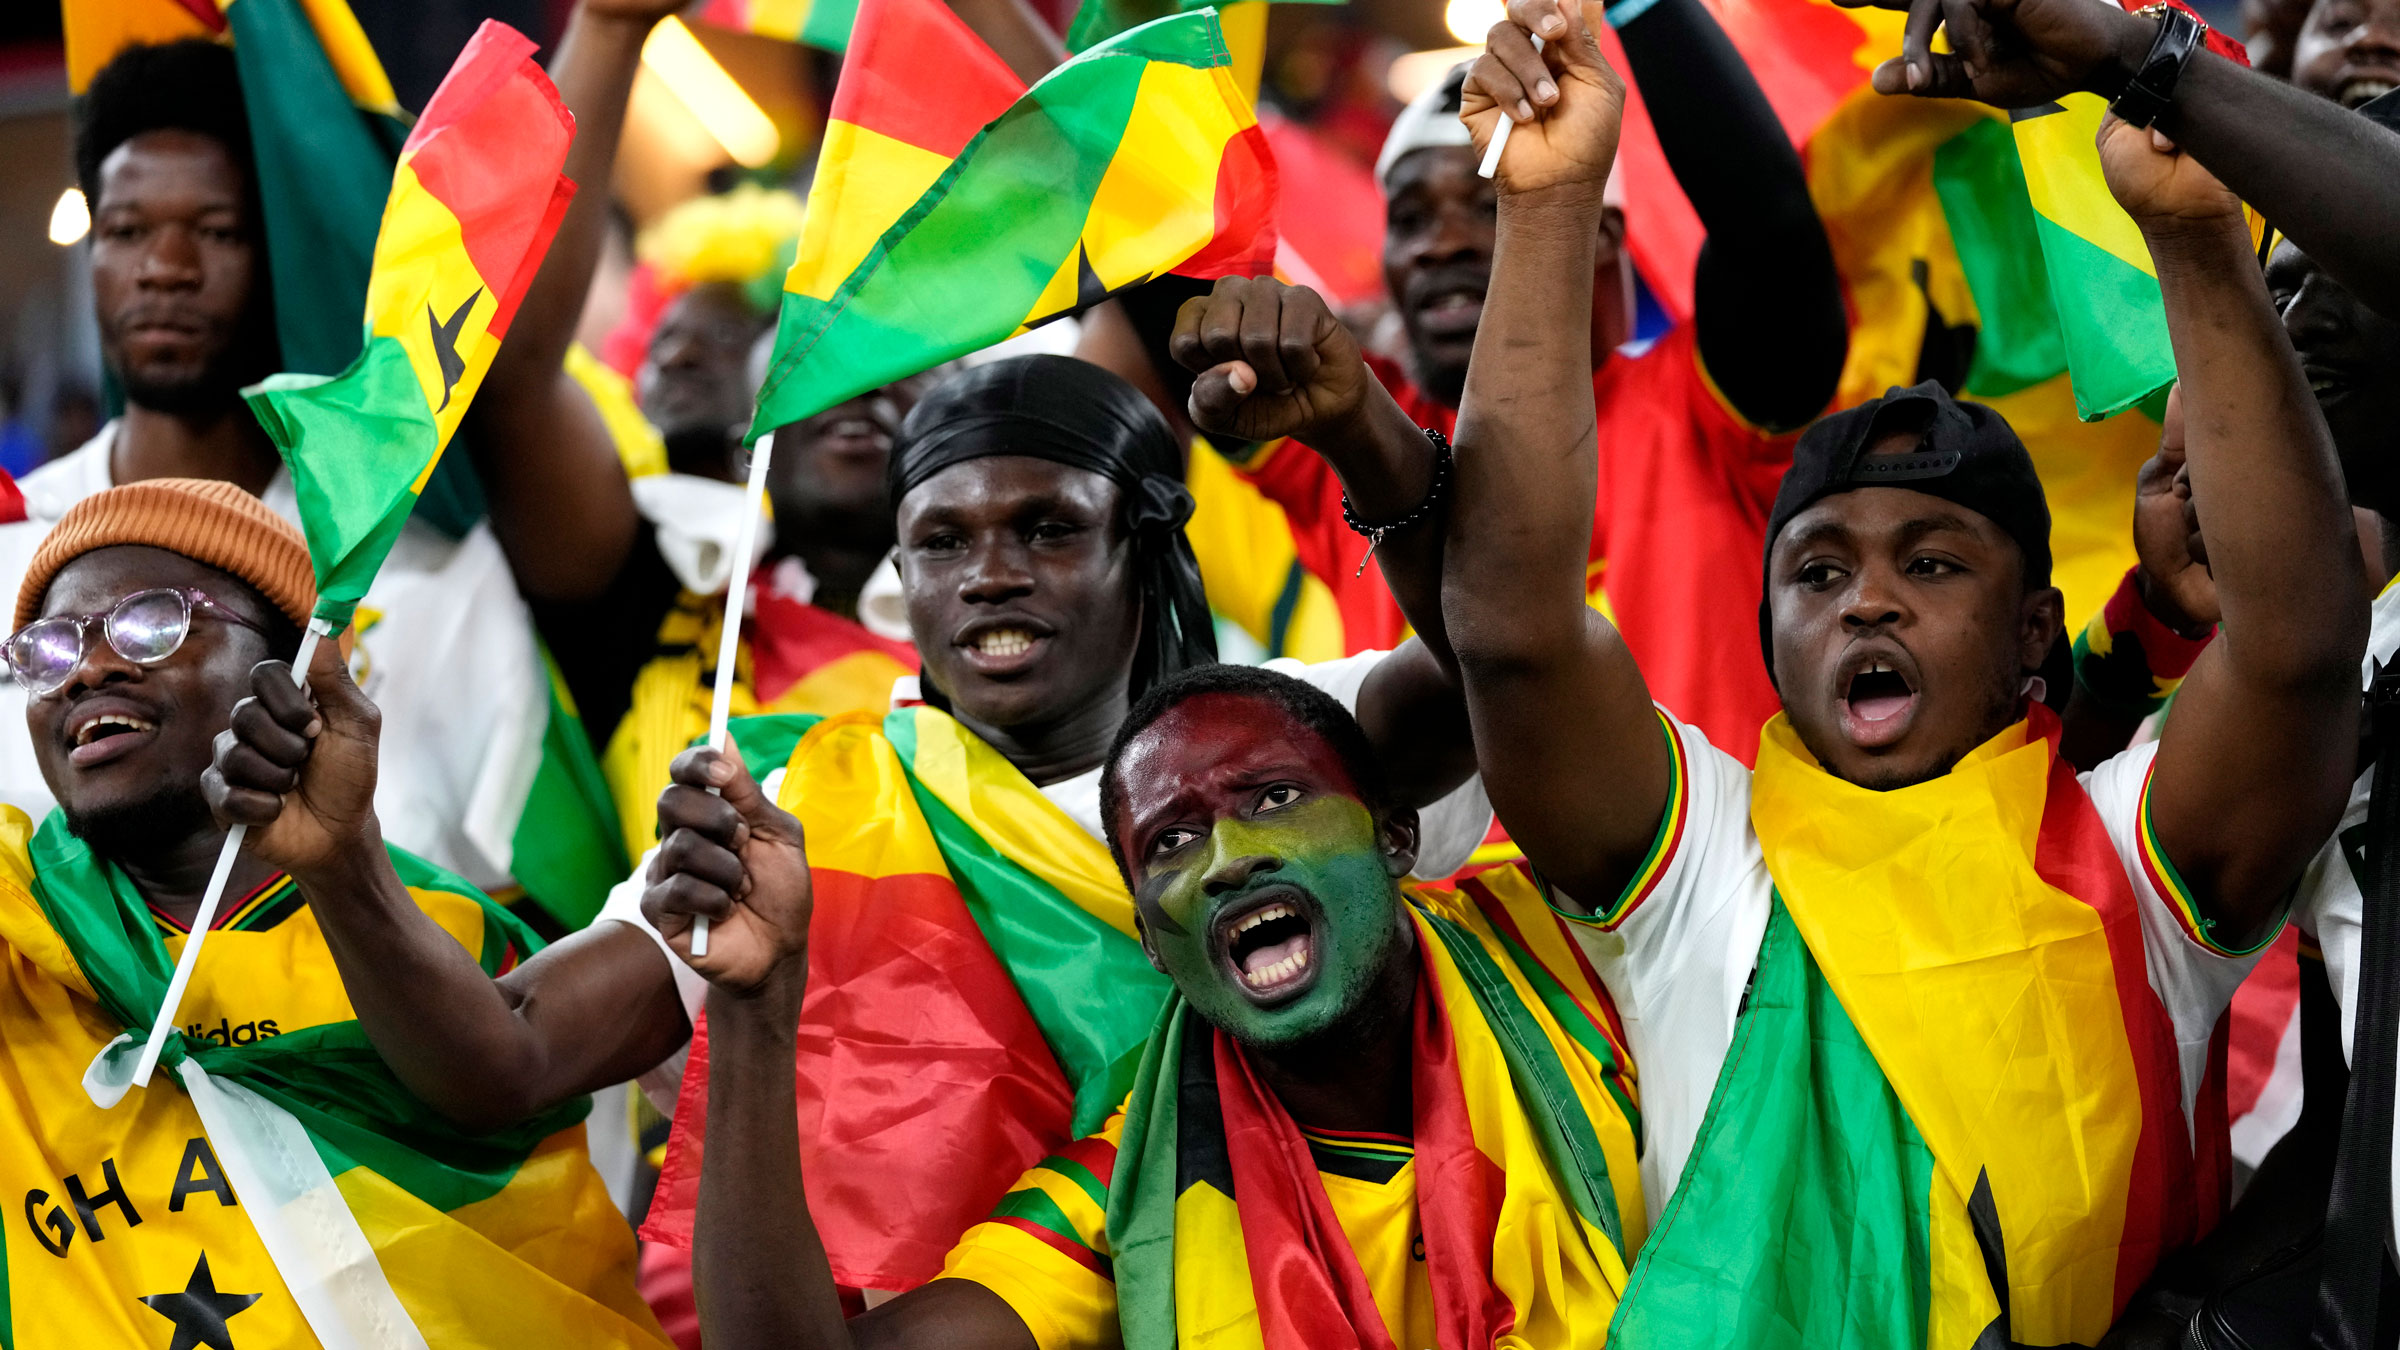 Fans of Ghana cheer before the start of Thursday's match against Portugal.